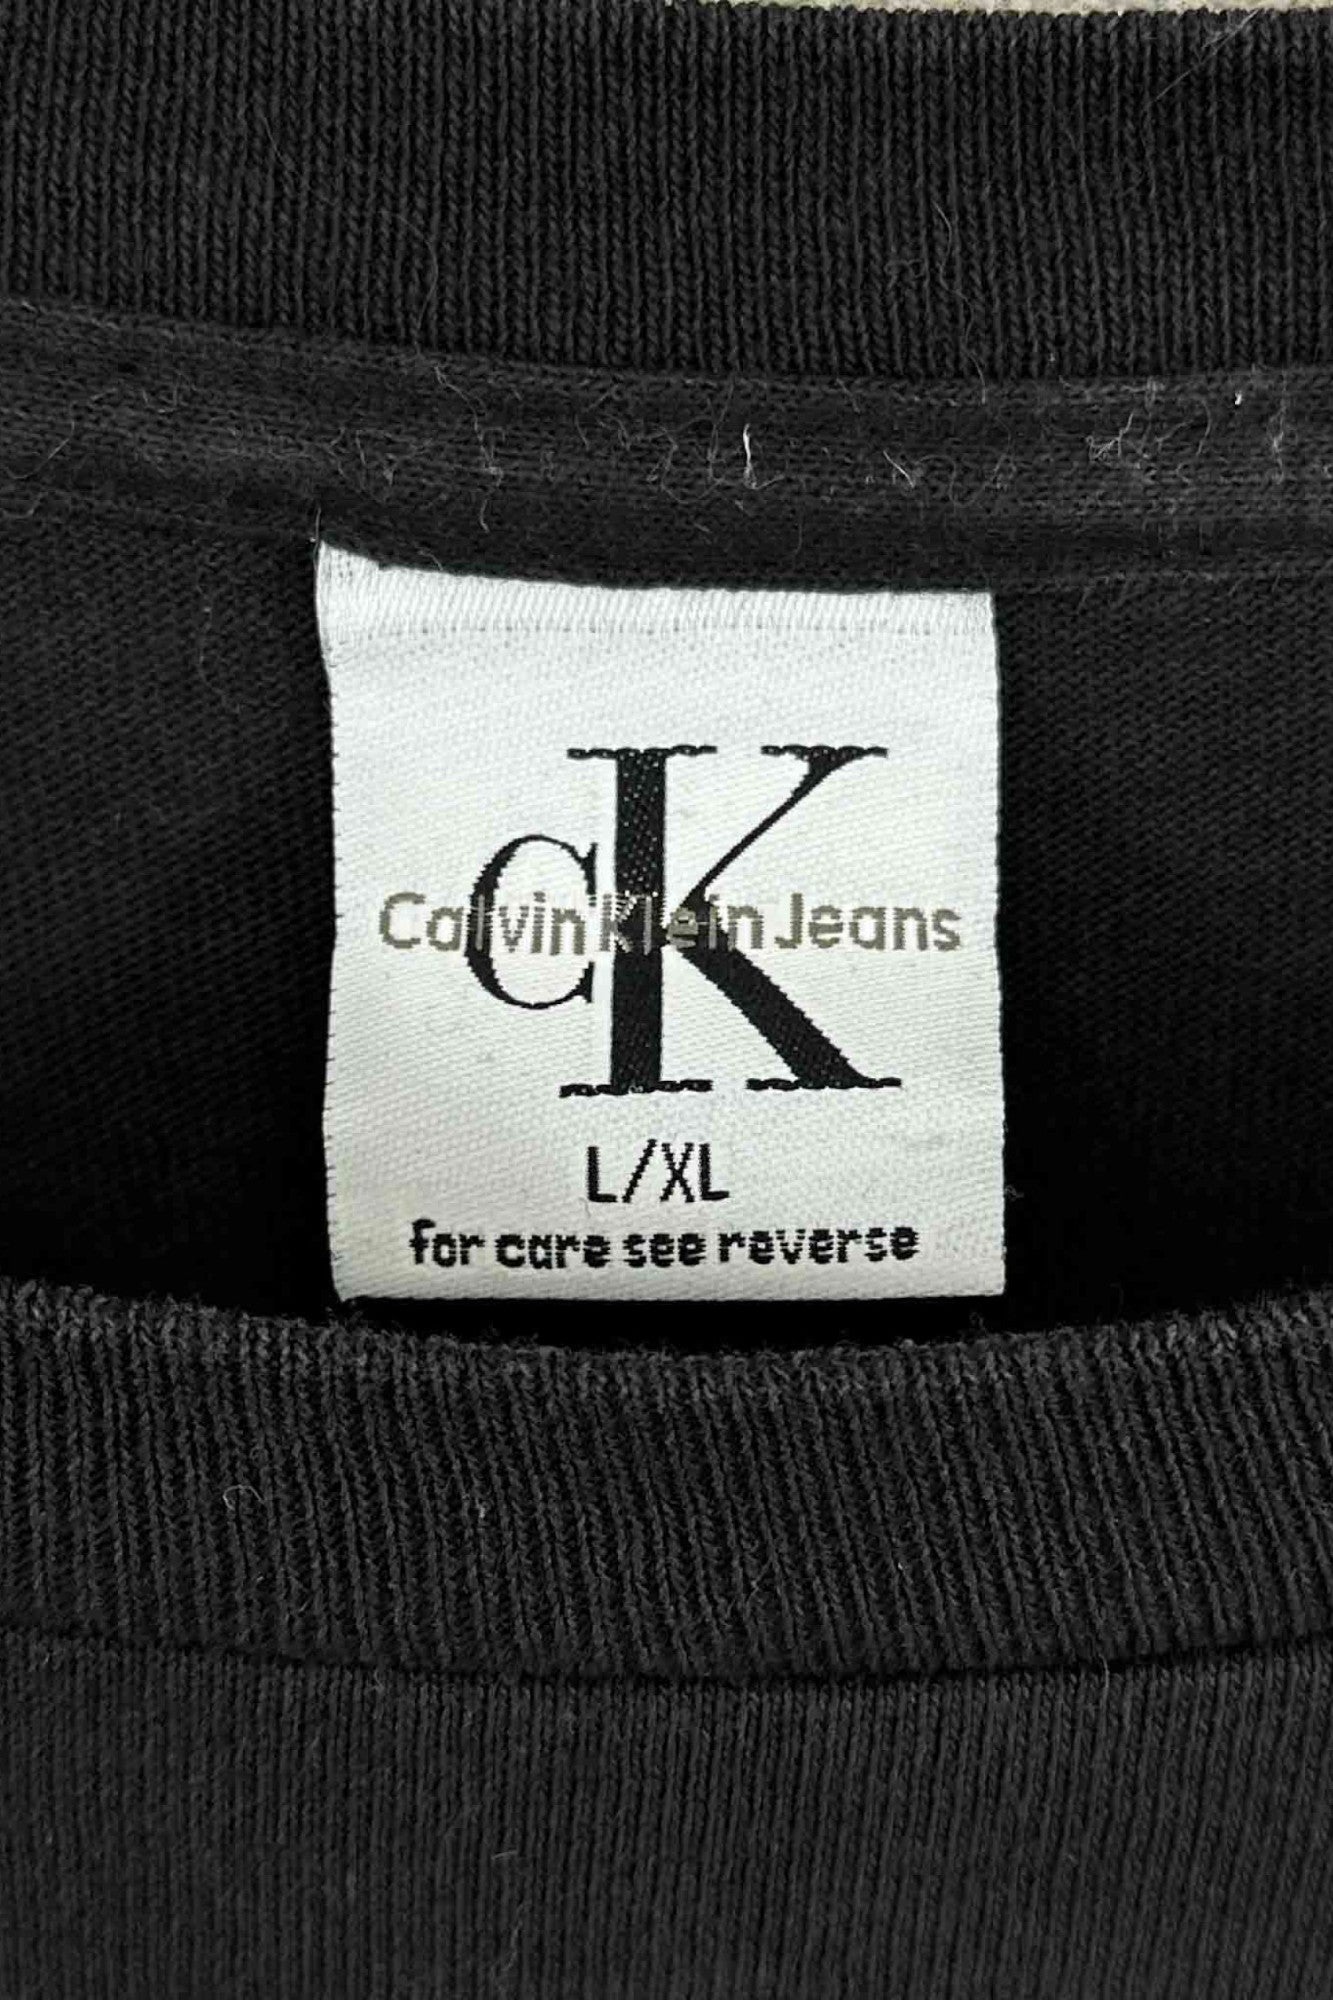 Made in USA Calvin Klein Jeans black T-shirt